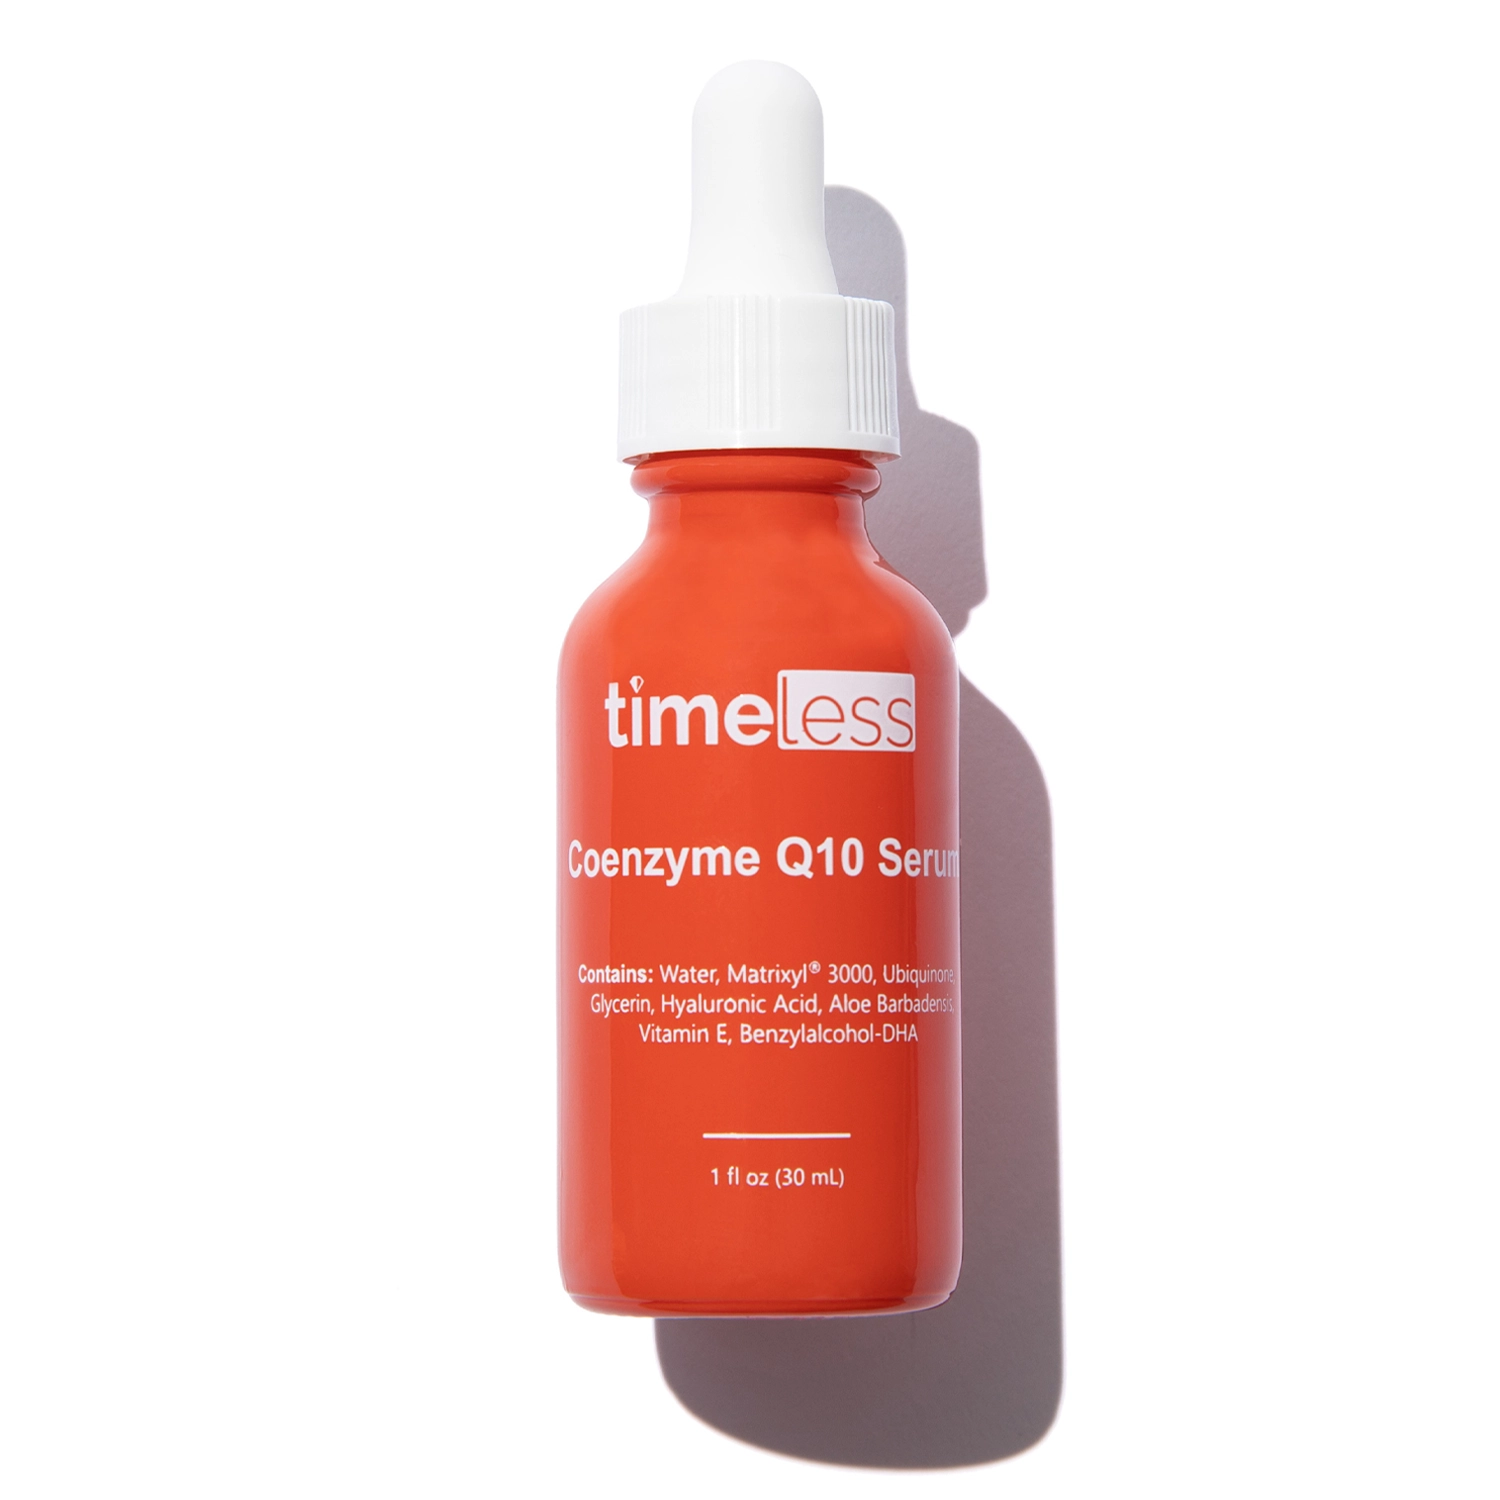 Timeless - Skin Care - Coenzyme Q10 Serum - Serum mit Coenzym Q10 - 30ml